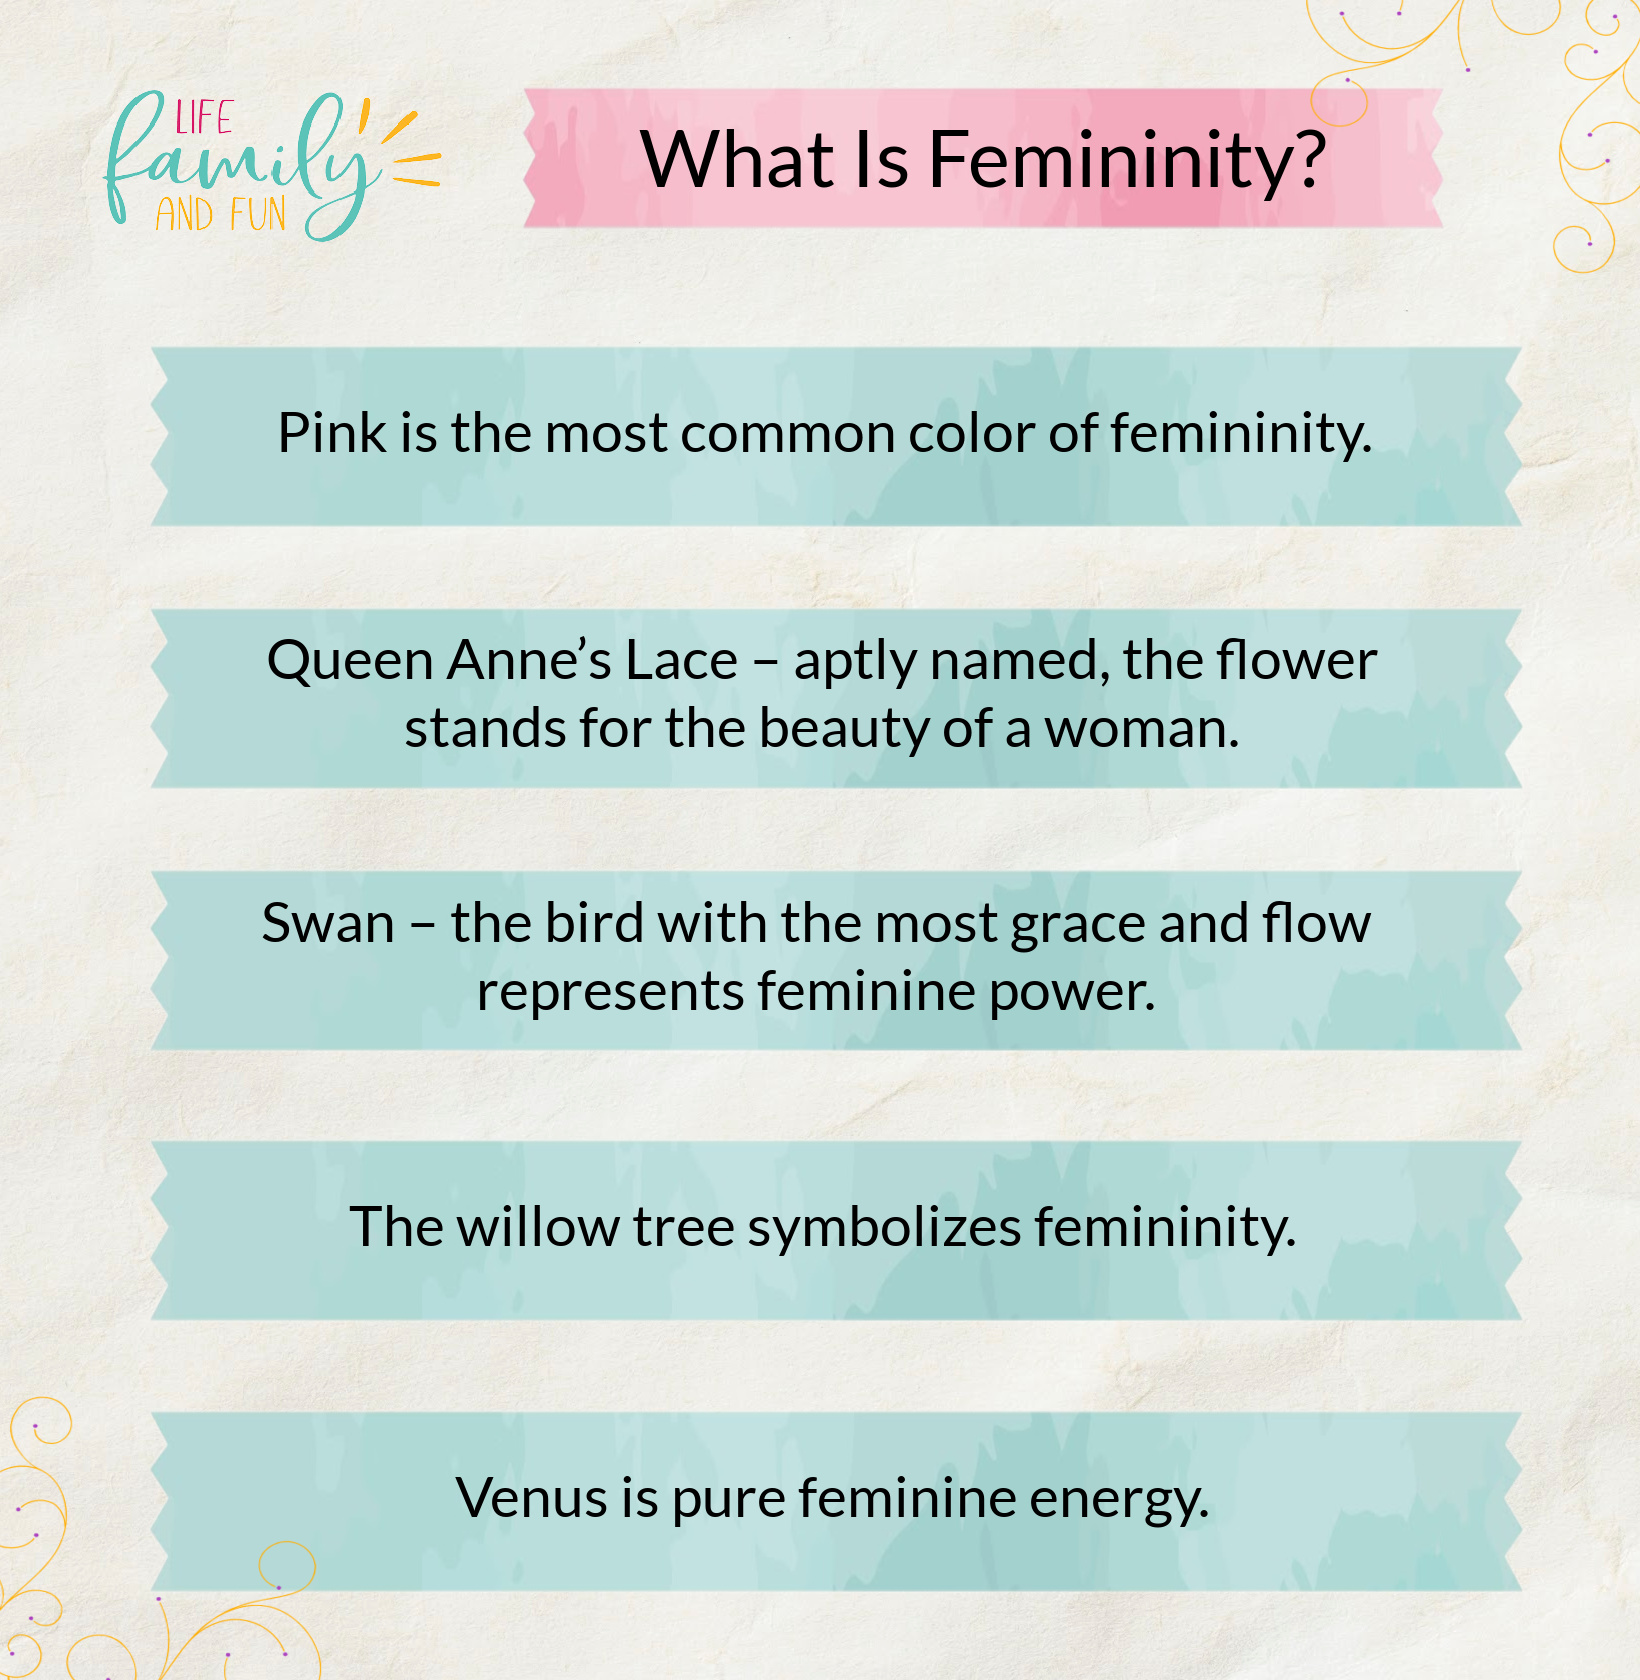 What Is Femininity?